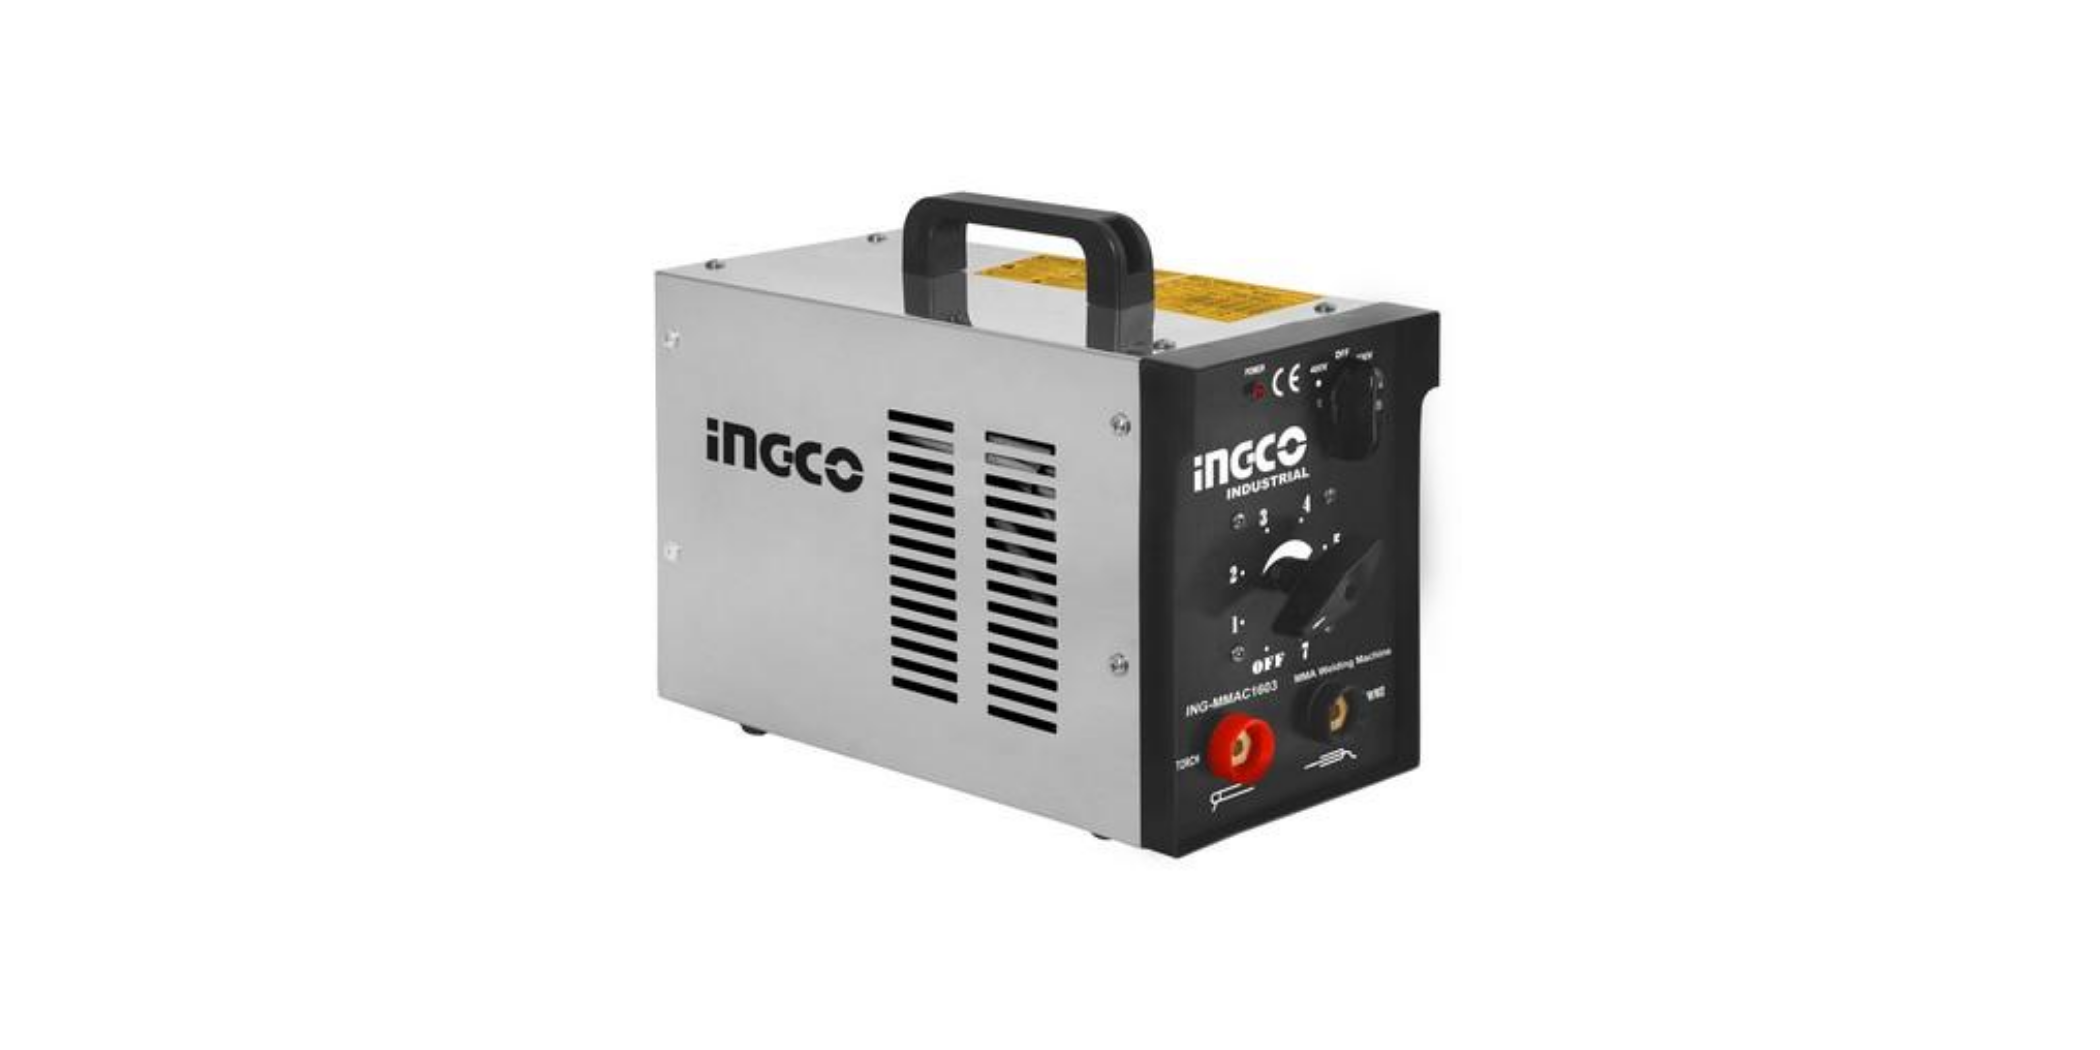 Ingco Ing-Mmac2503 Mma Welding Machine